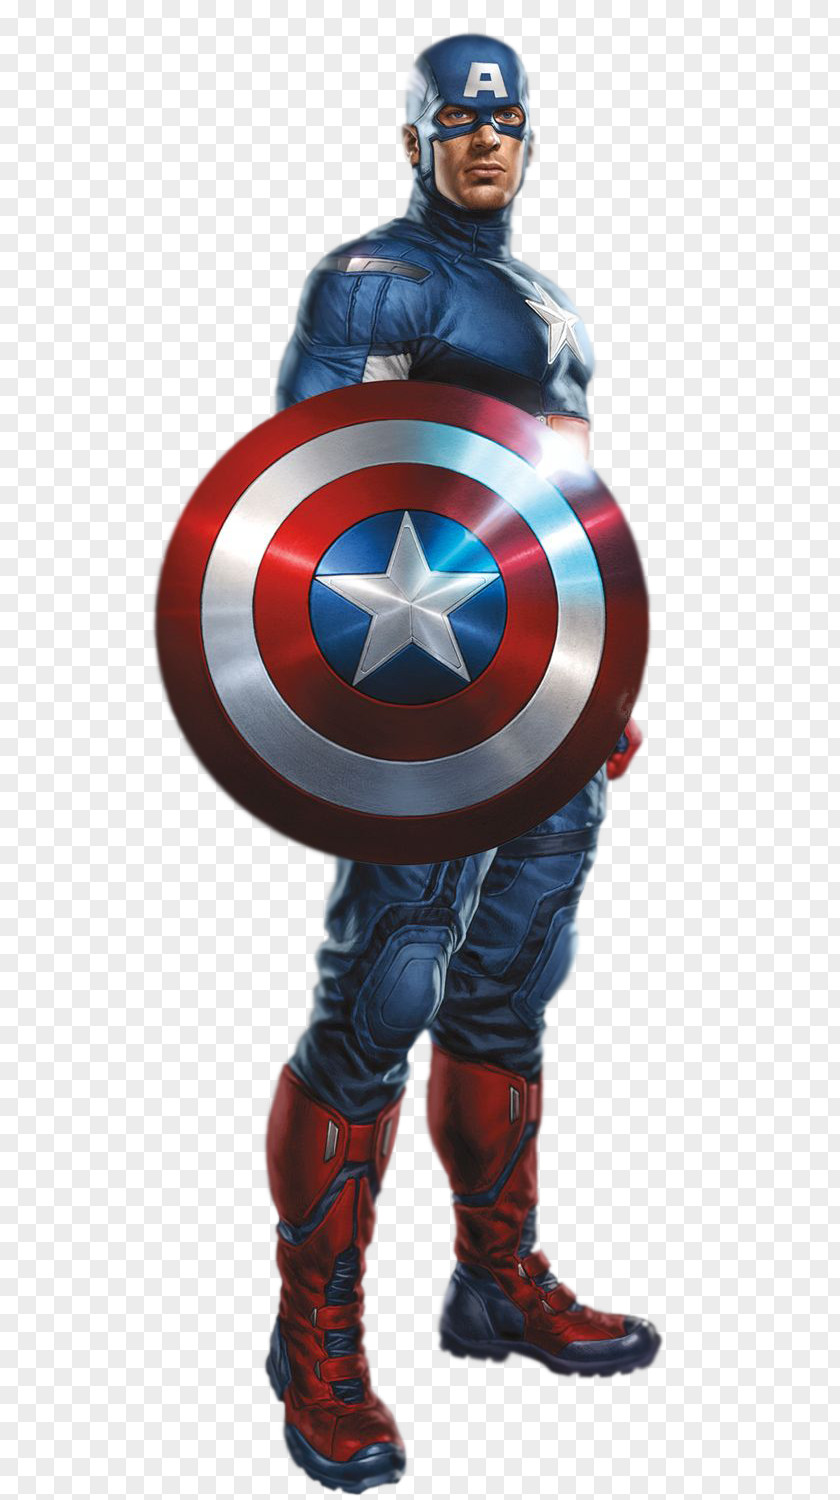 Captain America Iron Man Hulk The Avengers Black Widow PNG